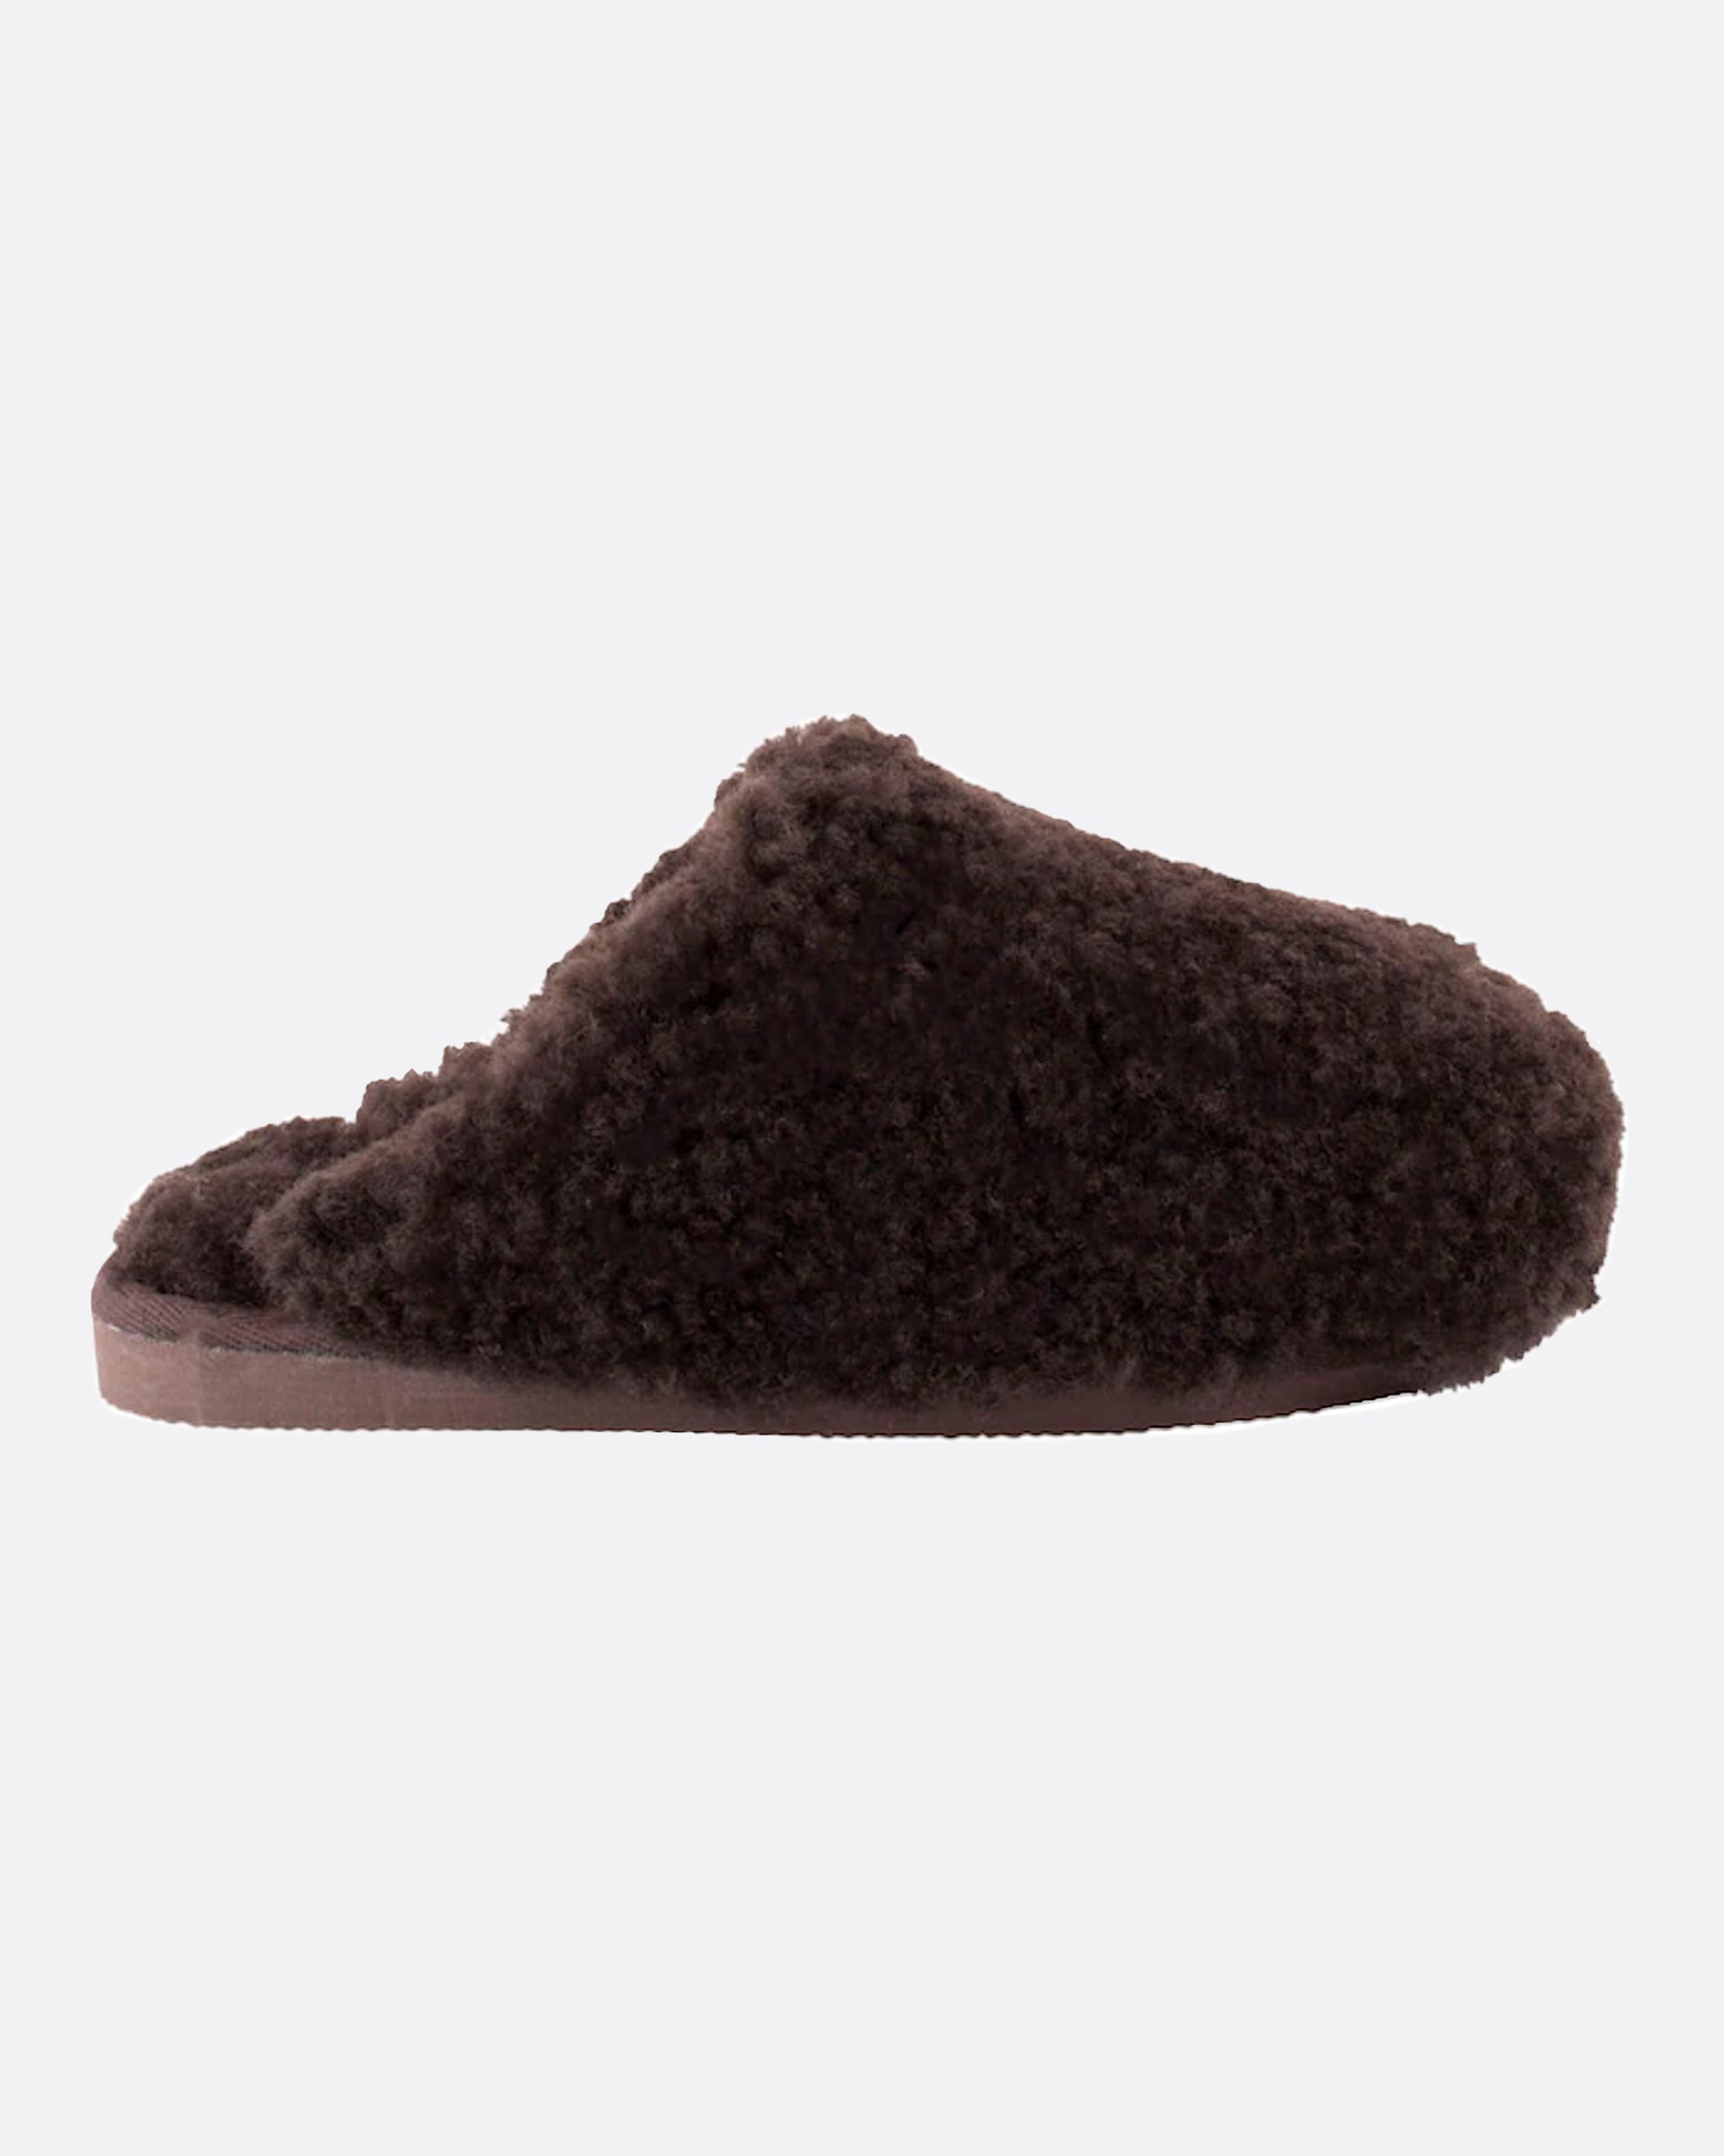 Dark brown sheepskin slipper, shown from the side.